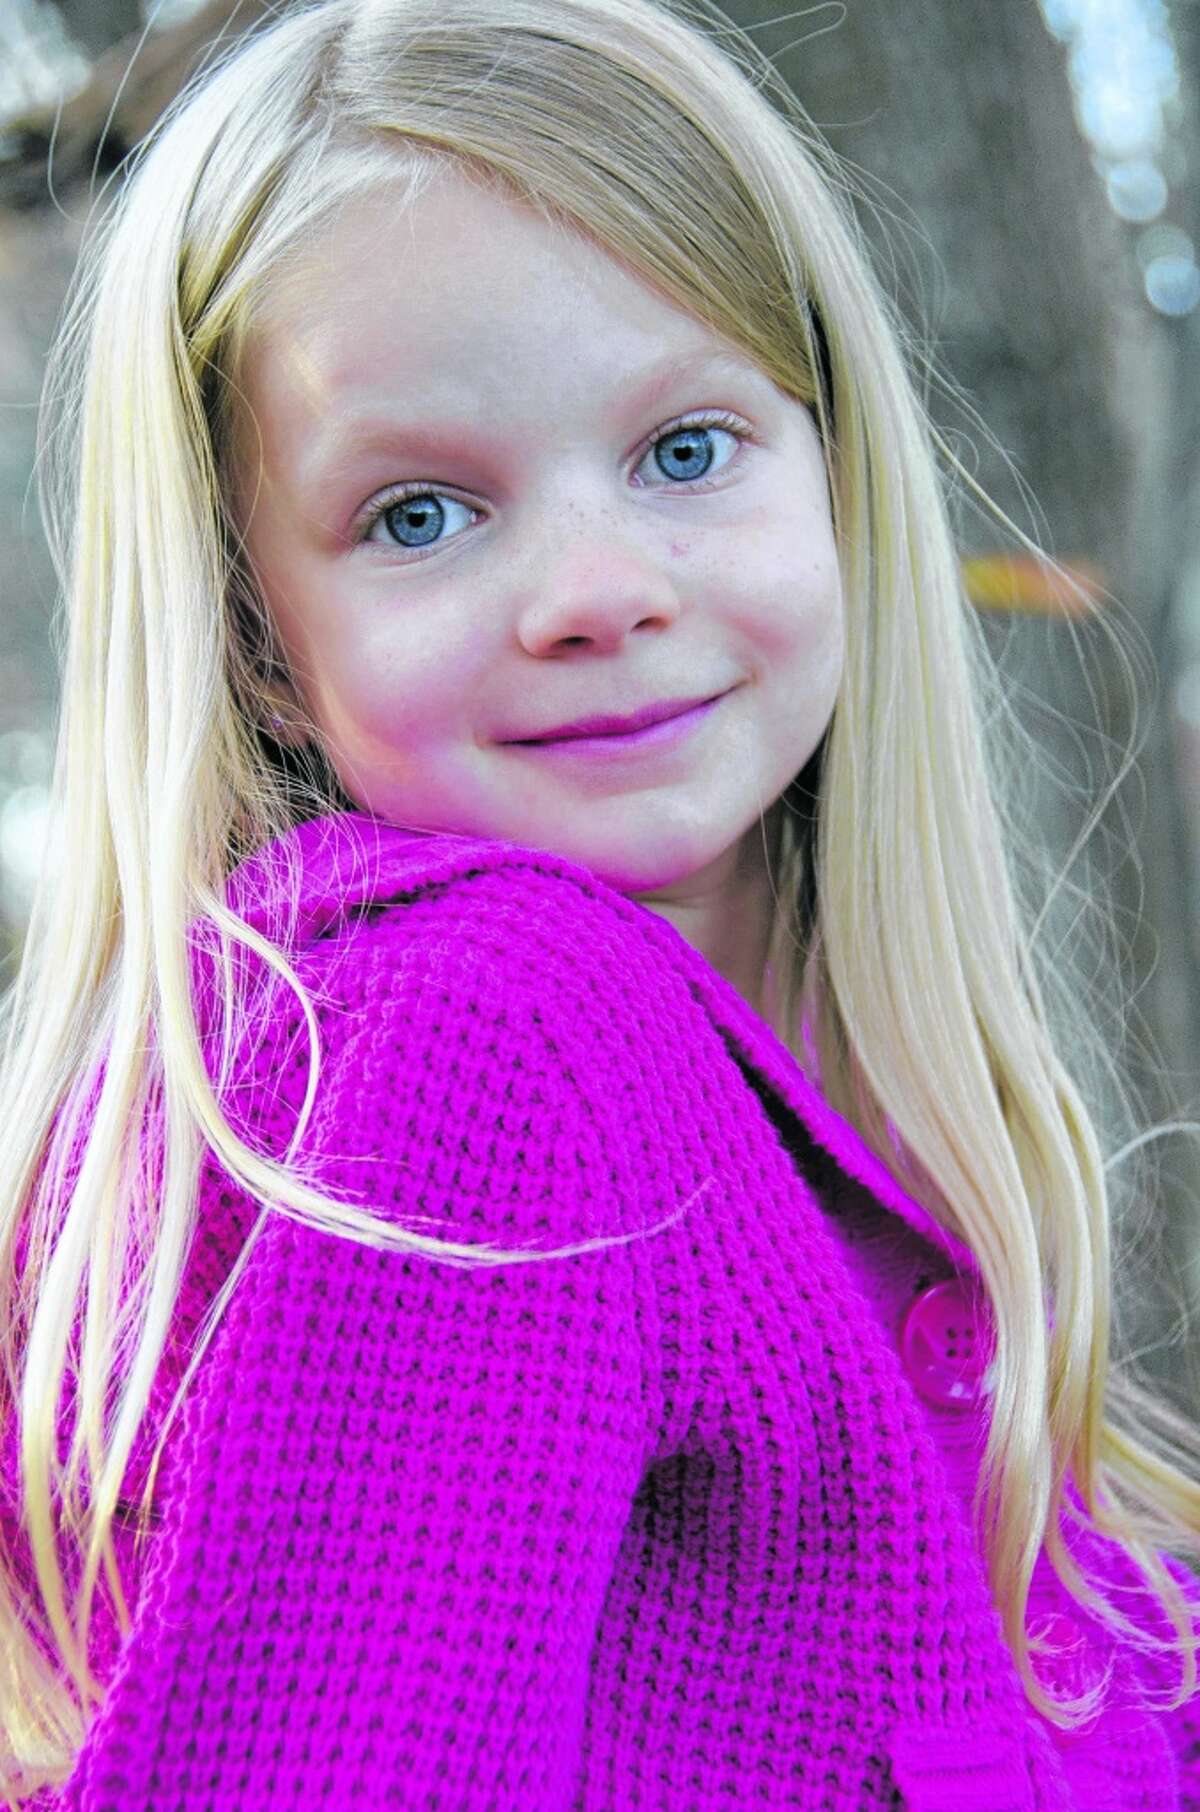 Emilie Alice Parker was killed Friday, Dec. 14, 2012, when a gunman opened fire at Sandy Hook Elementary School in Newtown, Conn.